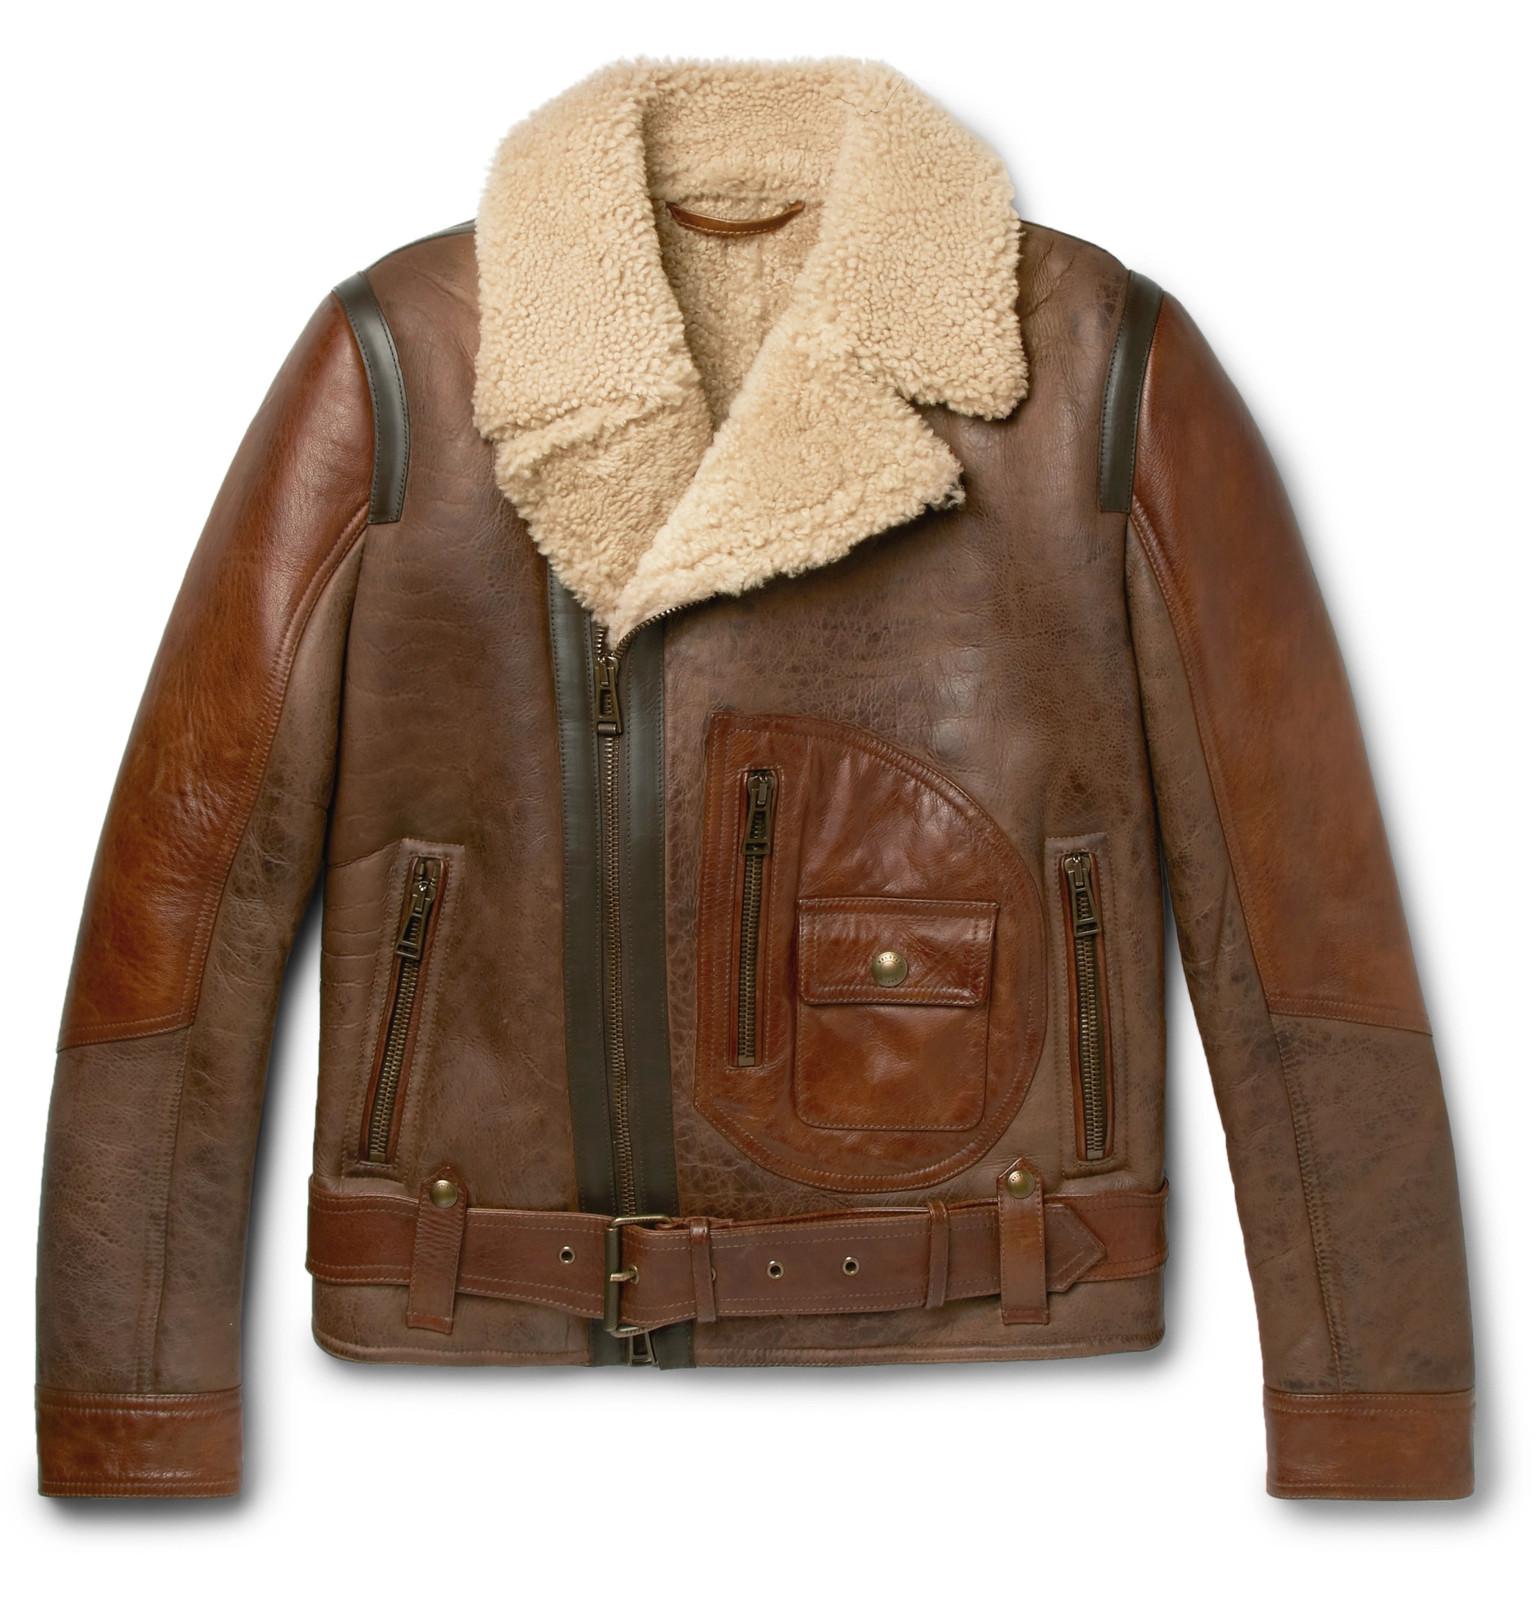 Belstaff Danescroft Leather-trimmed Shearling Jacket in Brown for Men - Lyst